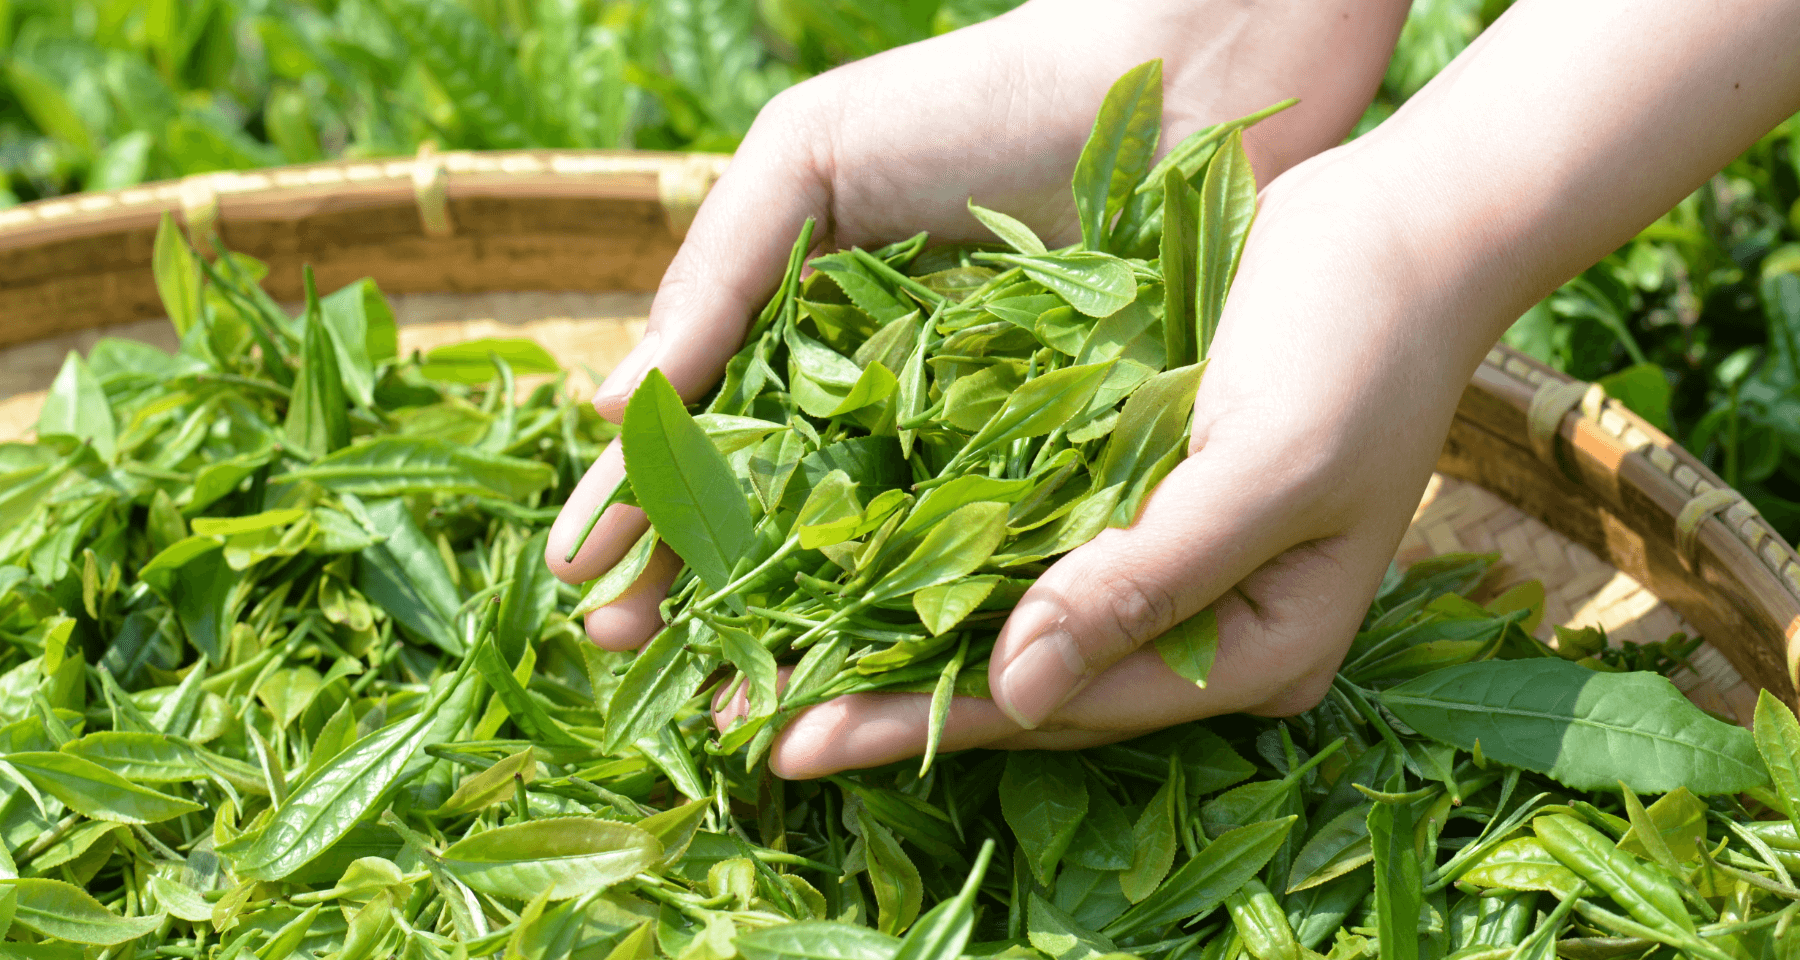 hand ful of fresh harvested tea leaves